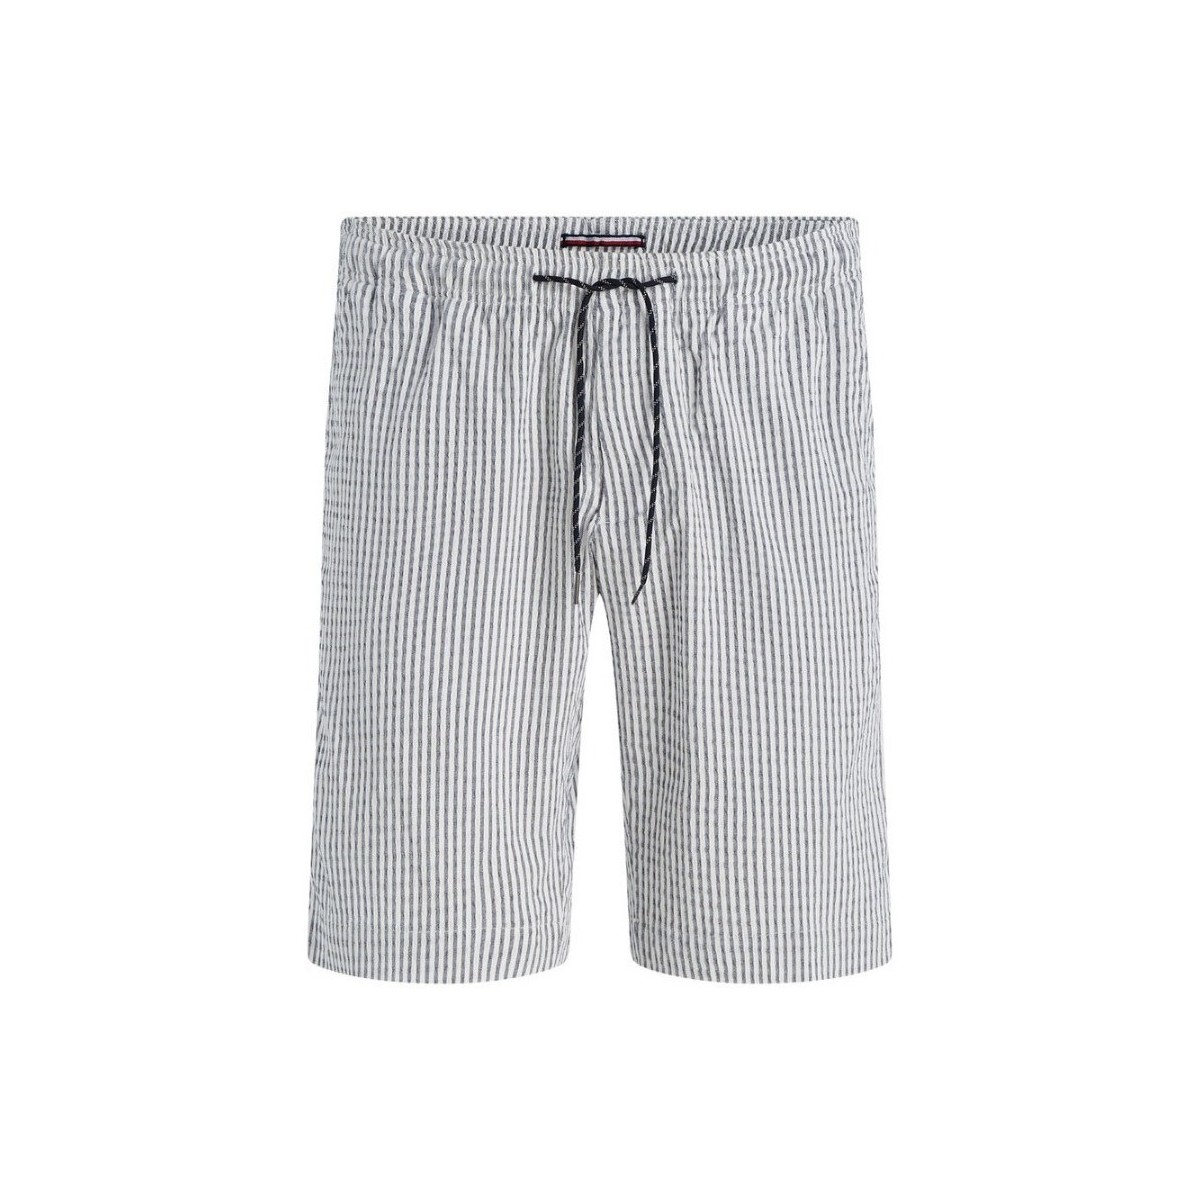 Vêtements Homme Shorts / Bermudas Tommy Hilfiger MW0MW31236 Blanc